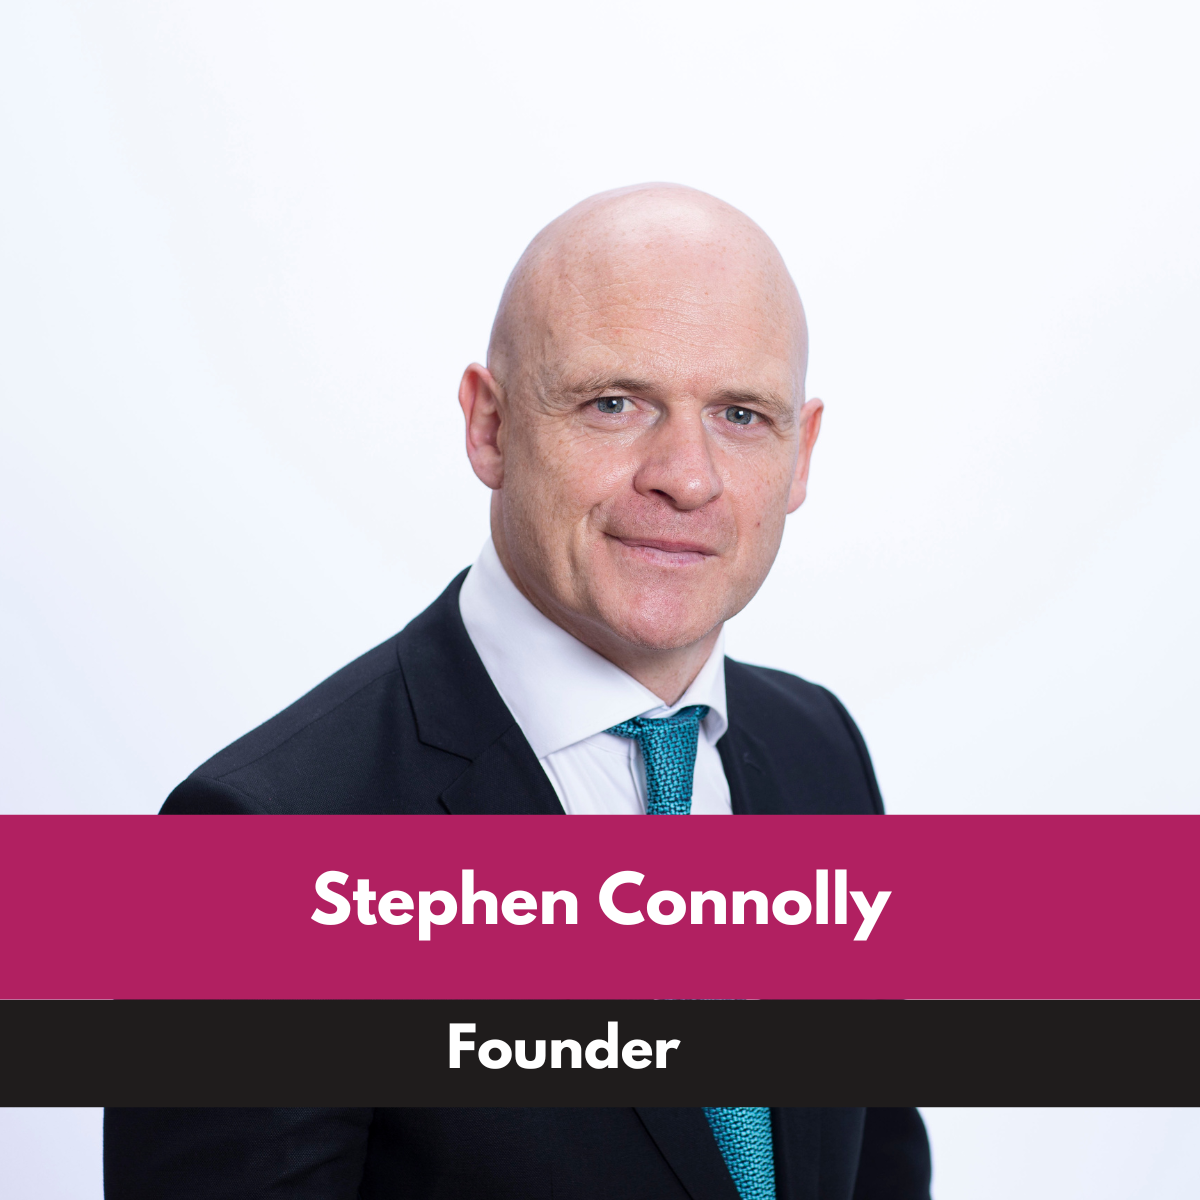 Stephen Connolly